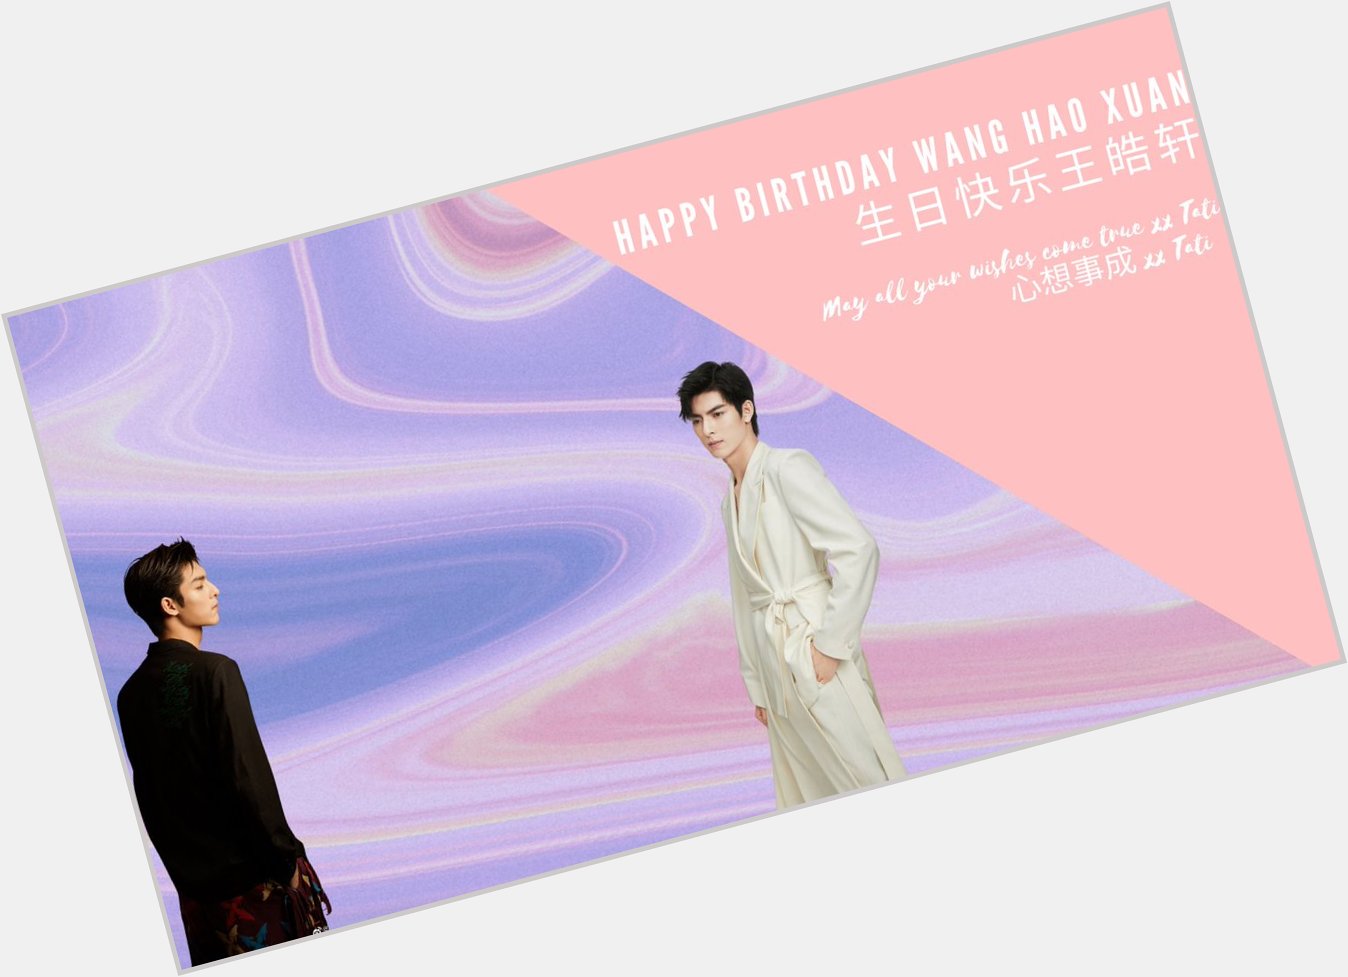 Happy birthday Wang Hao Xuan. May all your wishes come true xx Tati       .    xx Tati 